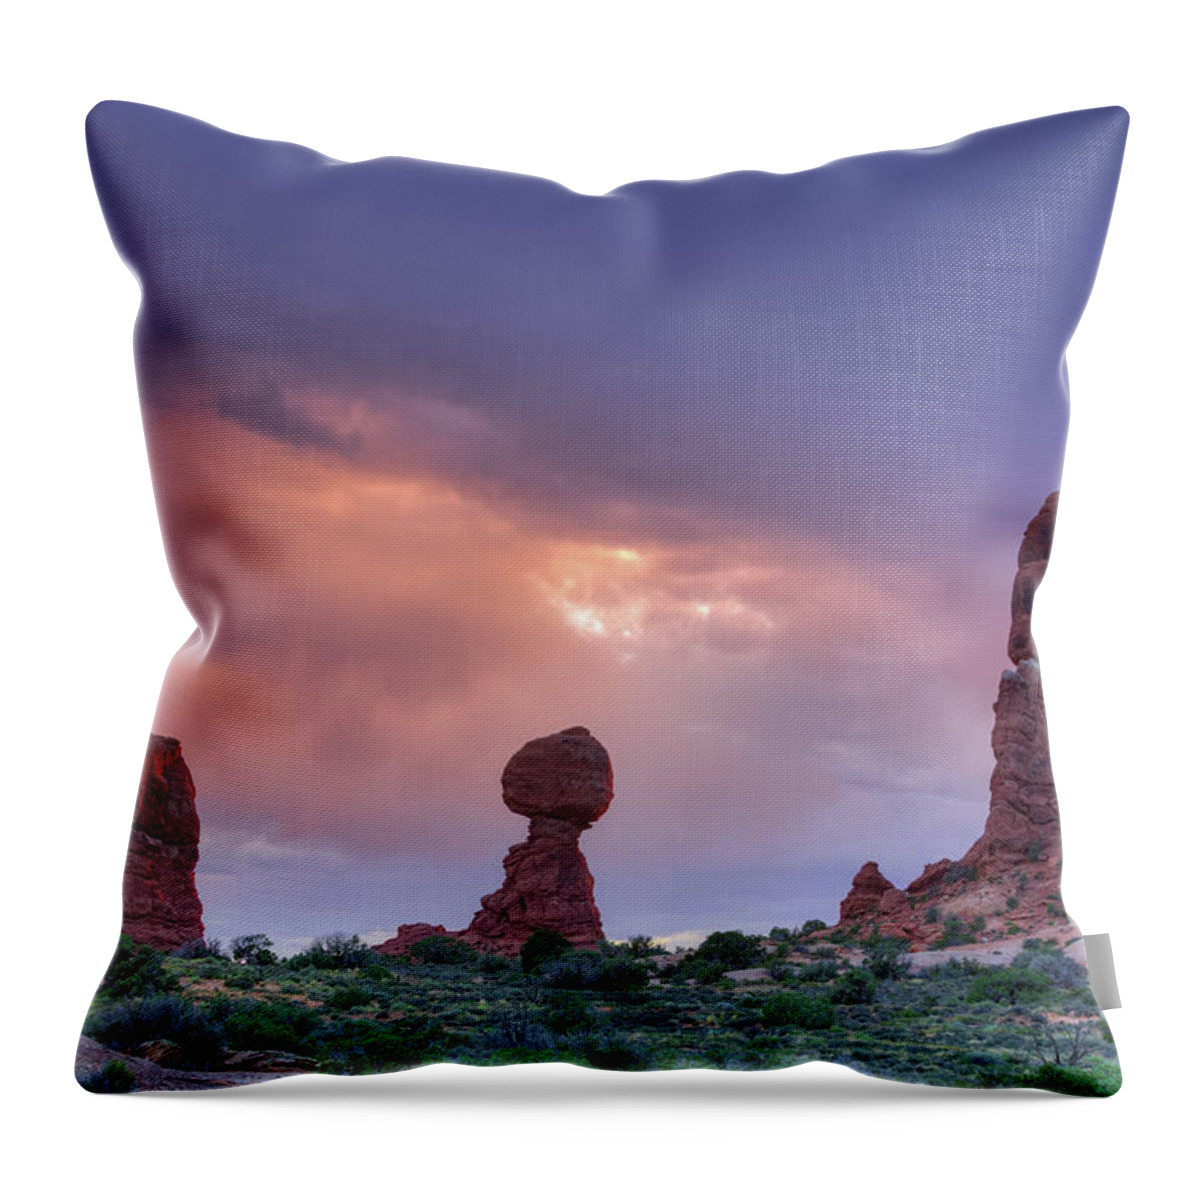 Desert Throw Pillow featuring the photograph Stormy Sunset in the Desert by David Watkins